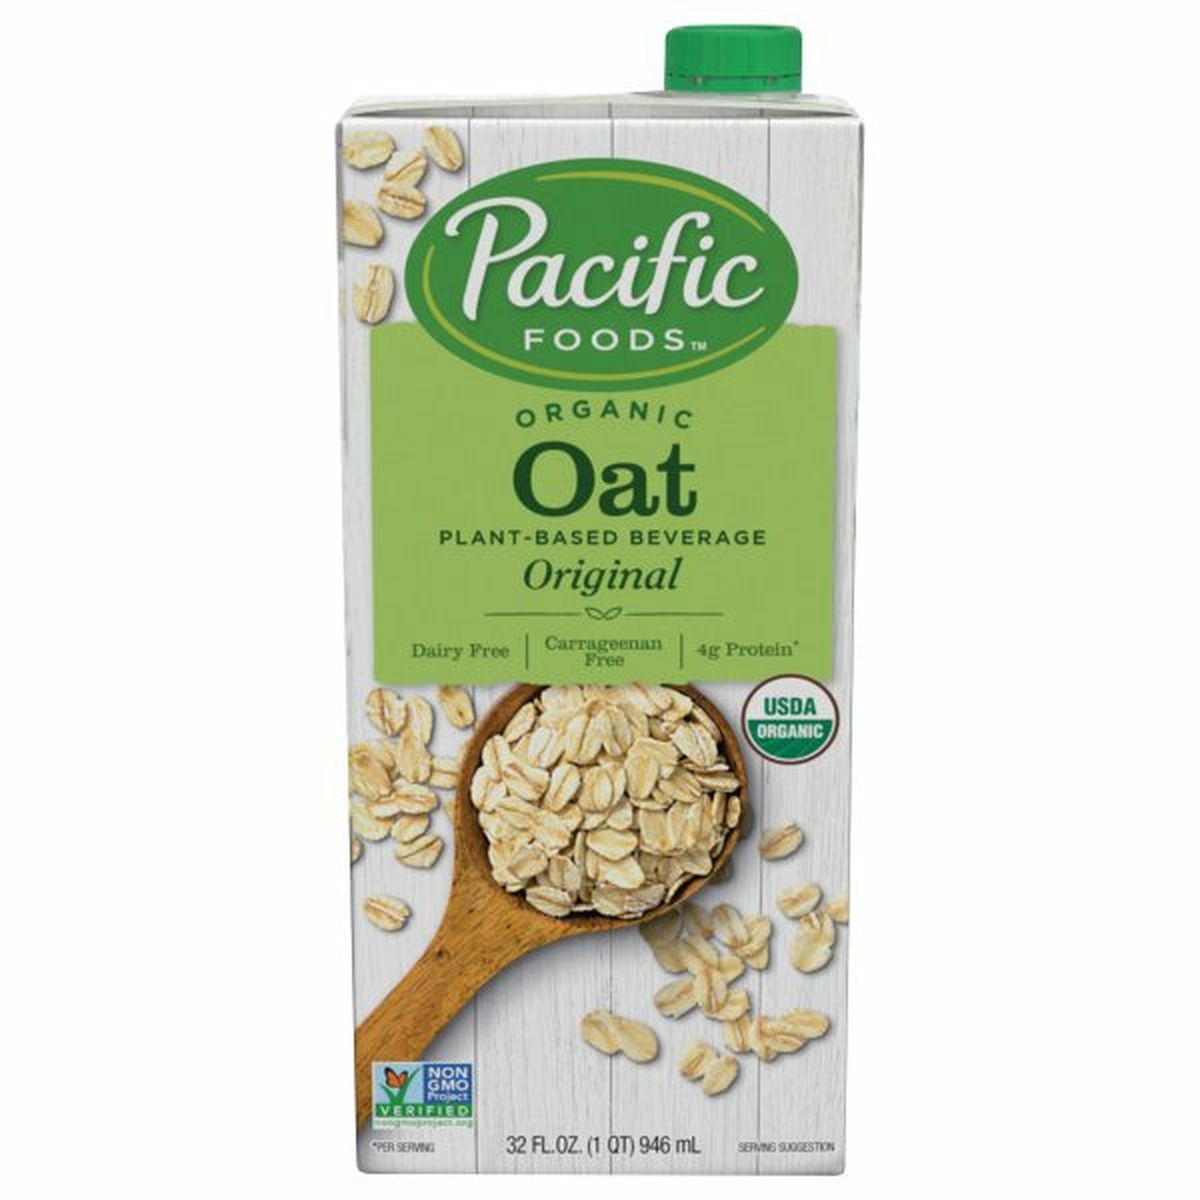 Calories in Pacific Plant-Based Beverage, Organic, Oat, Original